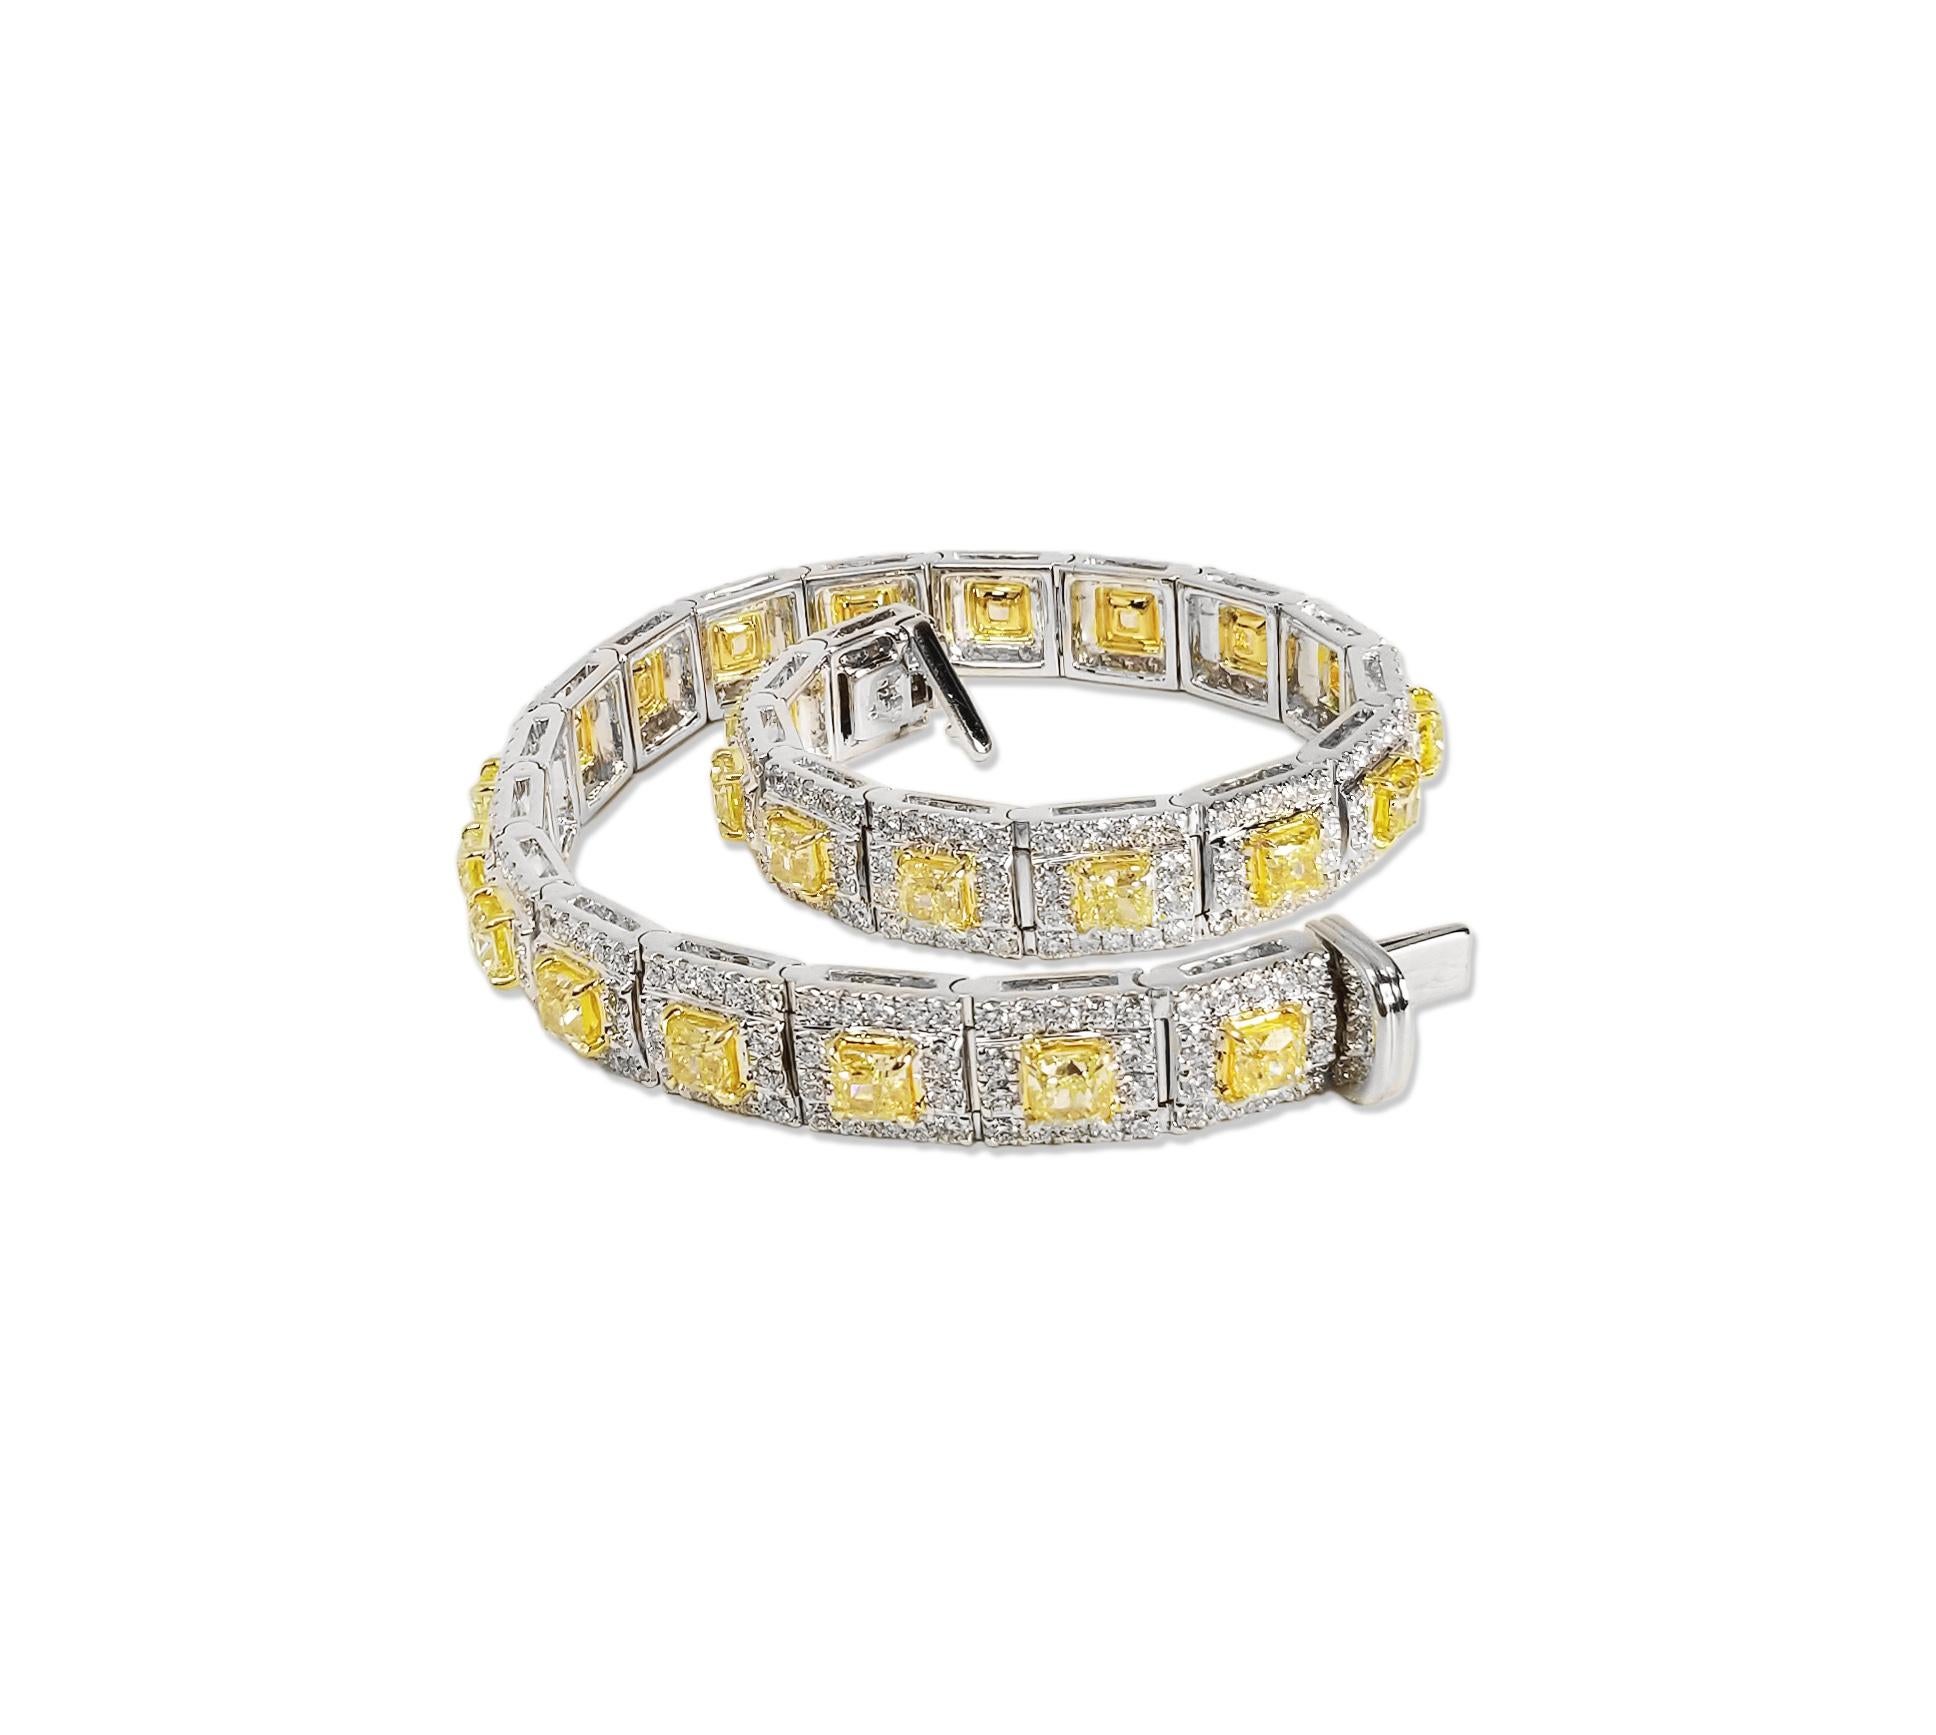 Contemporary Scarselli 4.31 Carats Fancy Intense Yellow Diamond Line Bracelet in Platinum